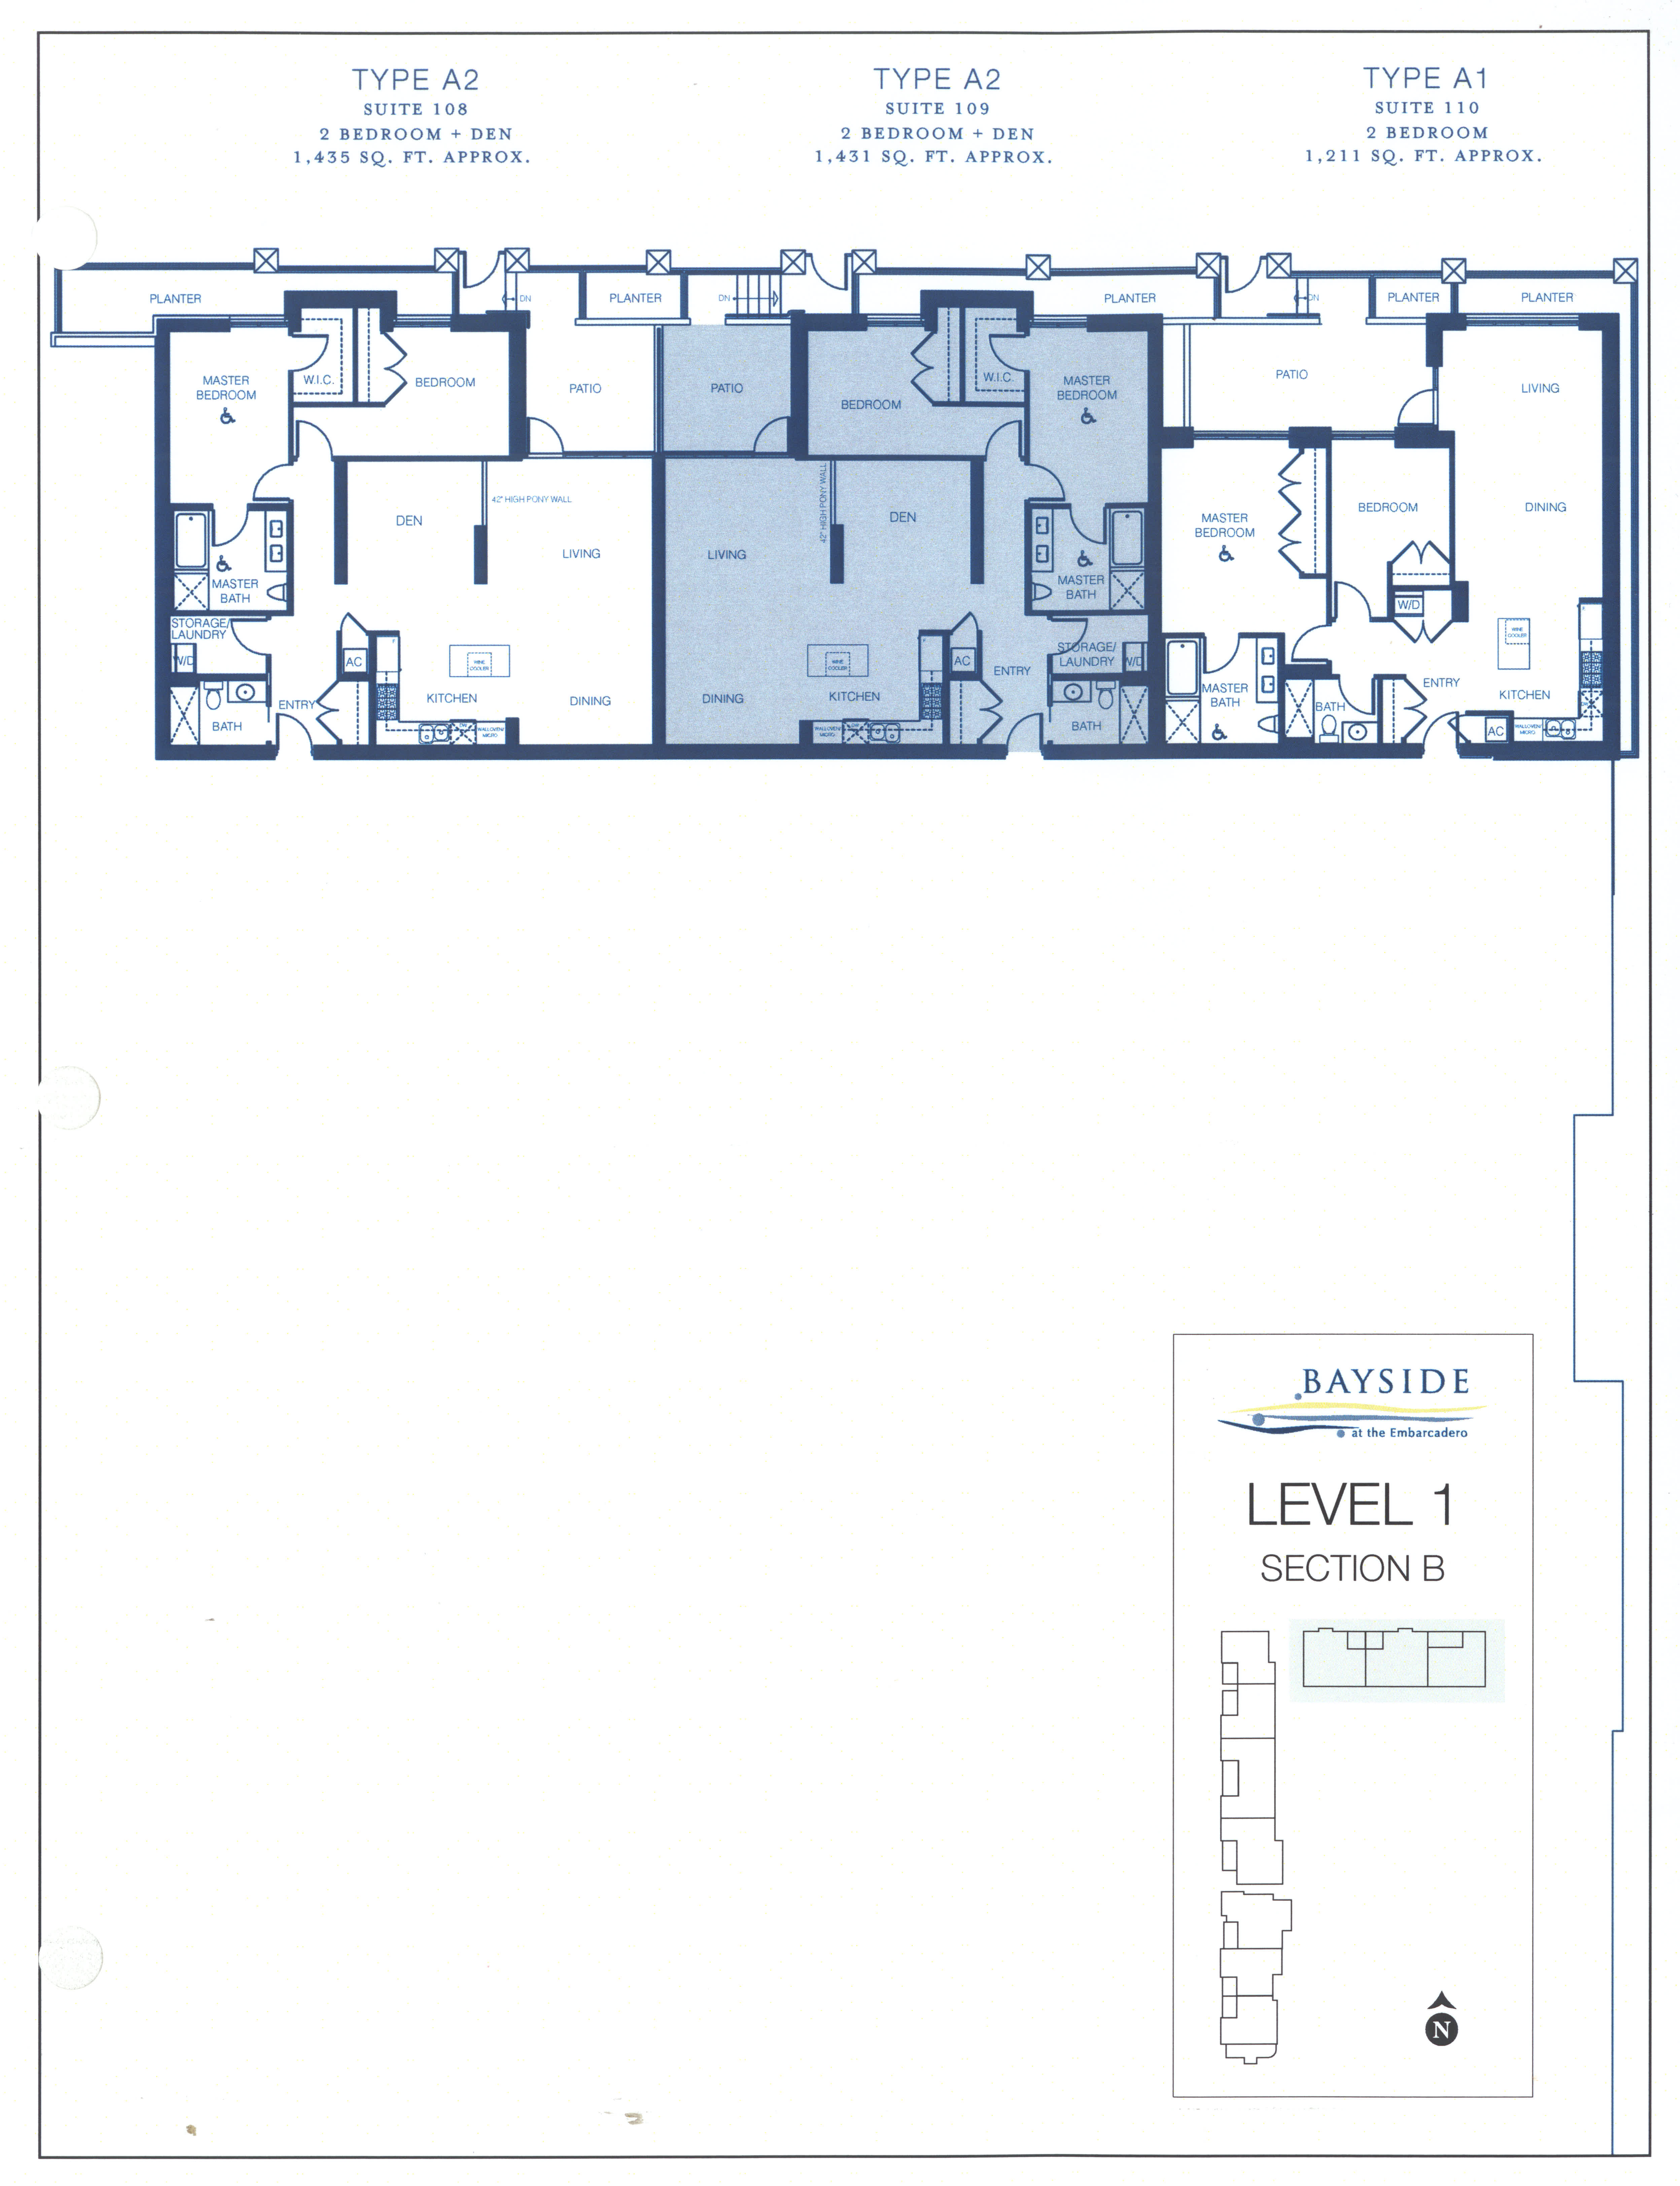 Bayside Floor Plan Level 1 Section B